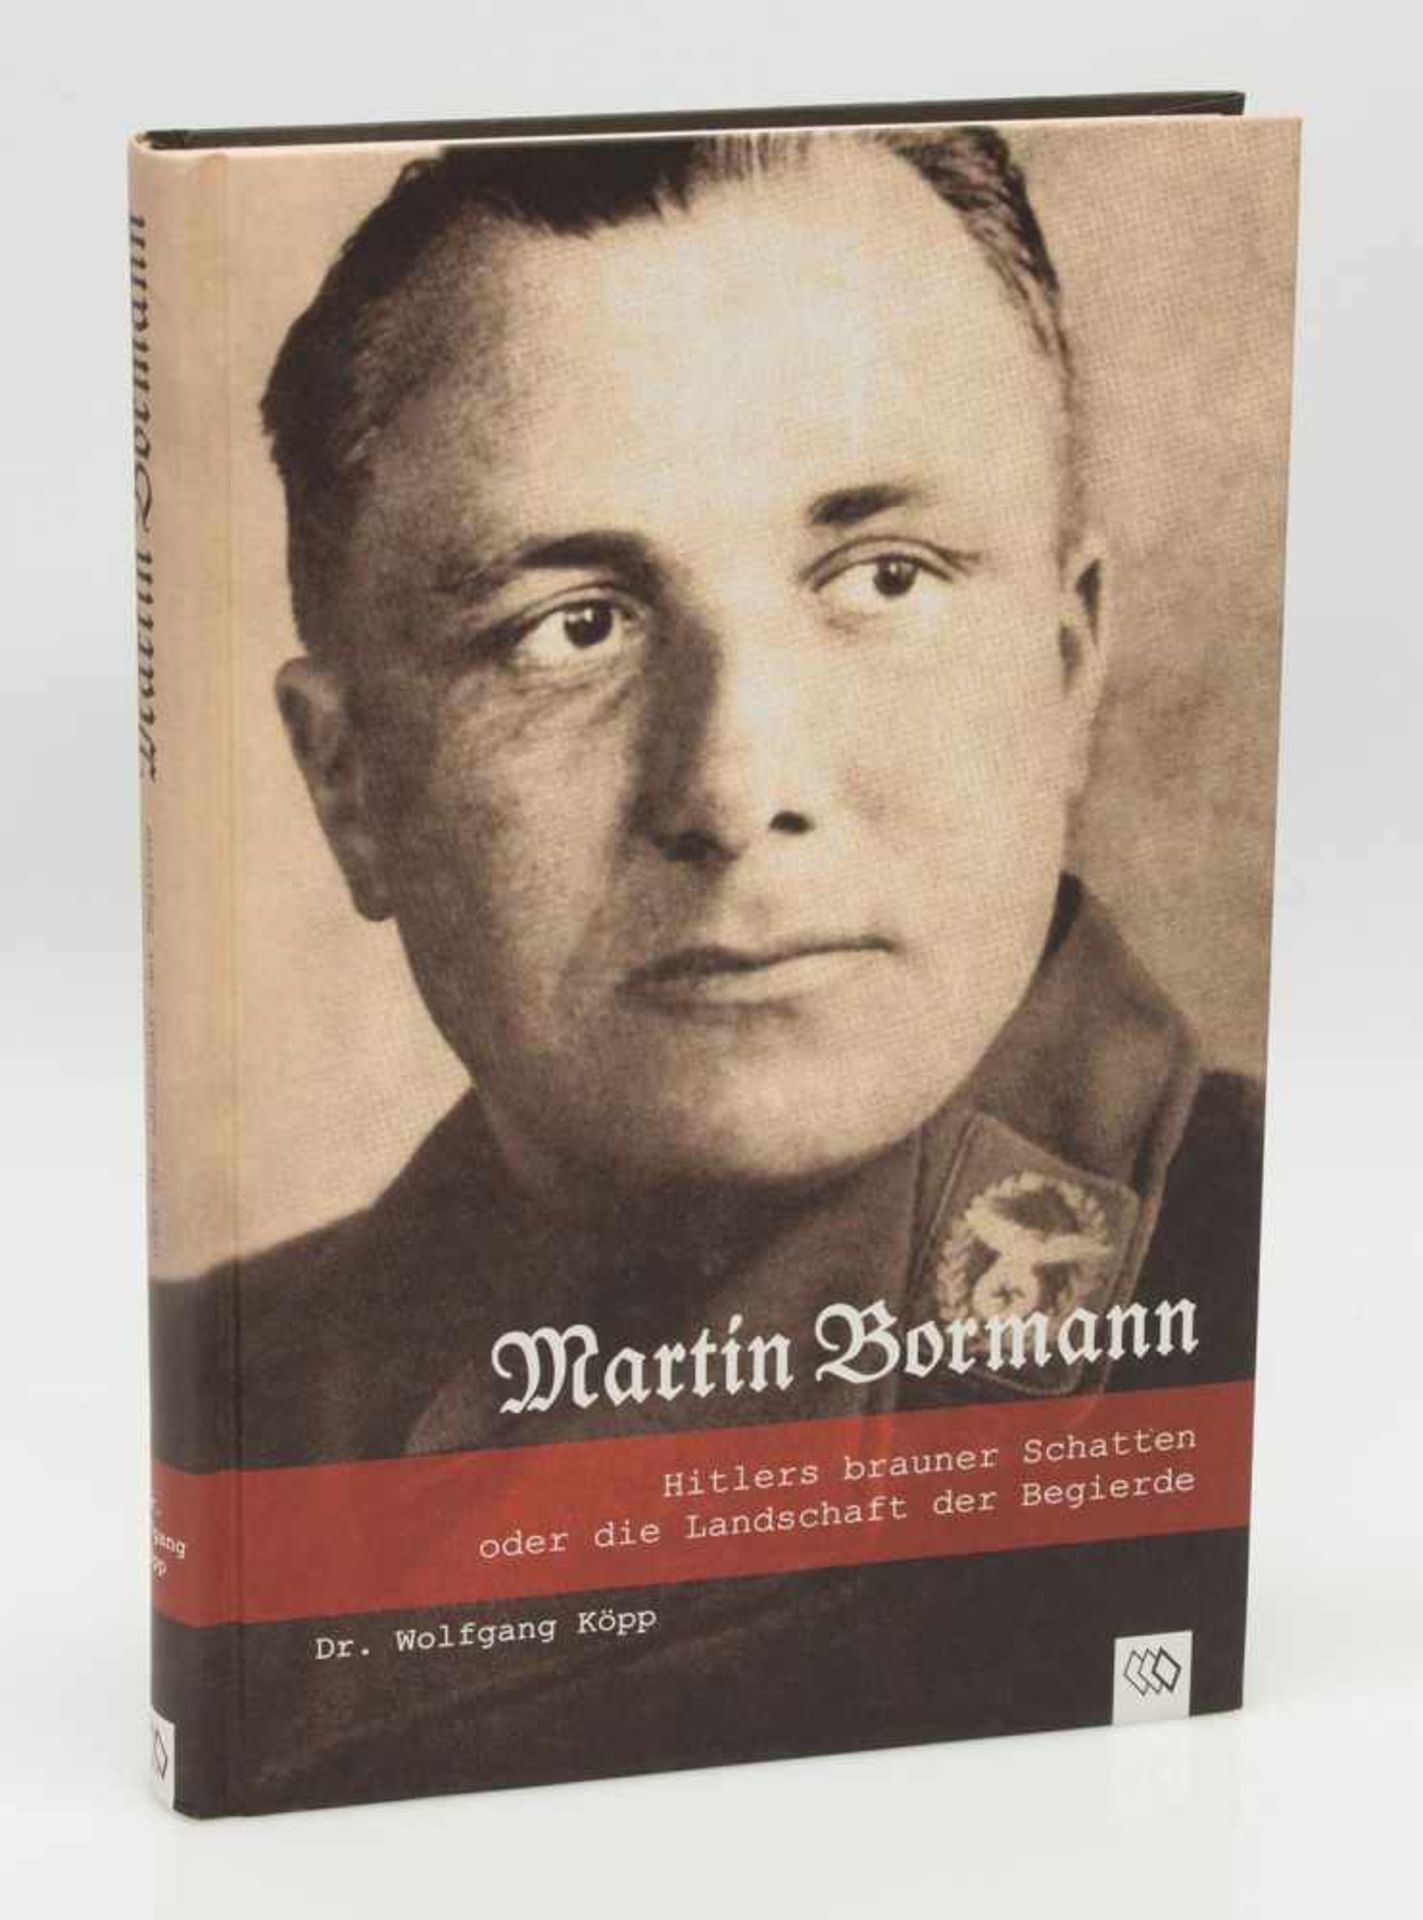 Dr. Wolfgang Köpp„Martin Bormann“ - Hitlers brauner Schatten oder die Legende der Begierde,